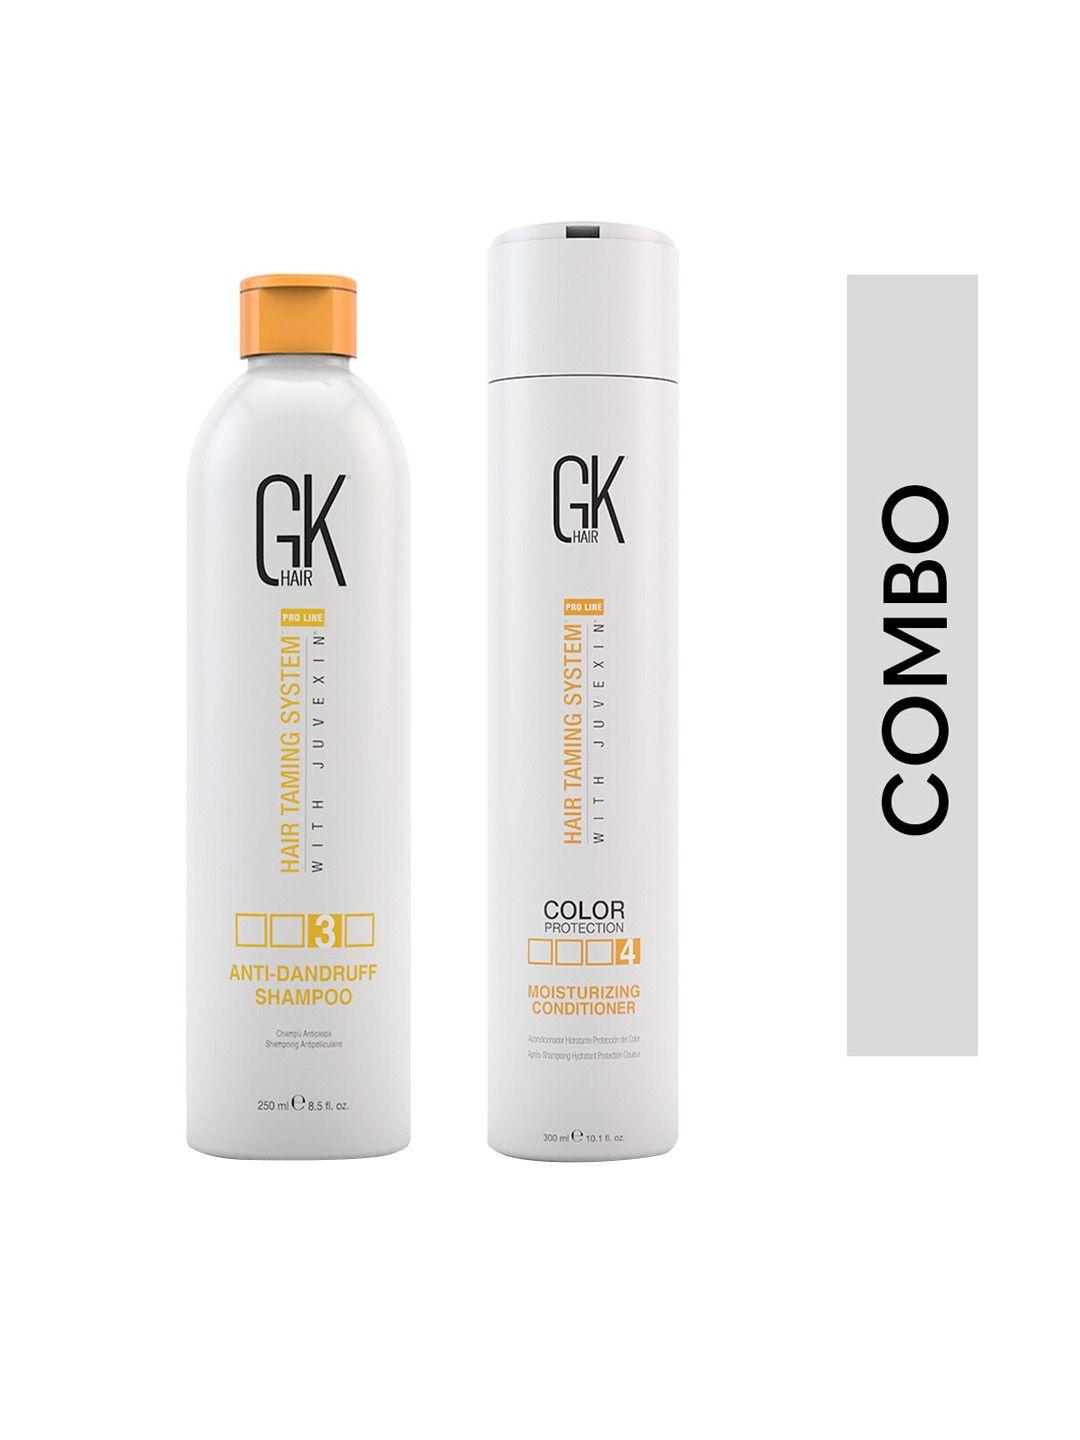 gk-hair-set-of-anti-dandruff-shampoo---250-ml-&-moisturizing-conditioner---300-ml